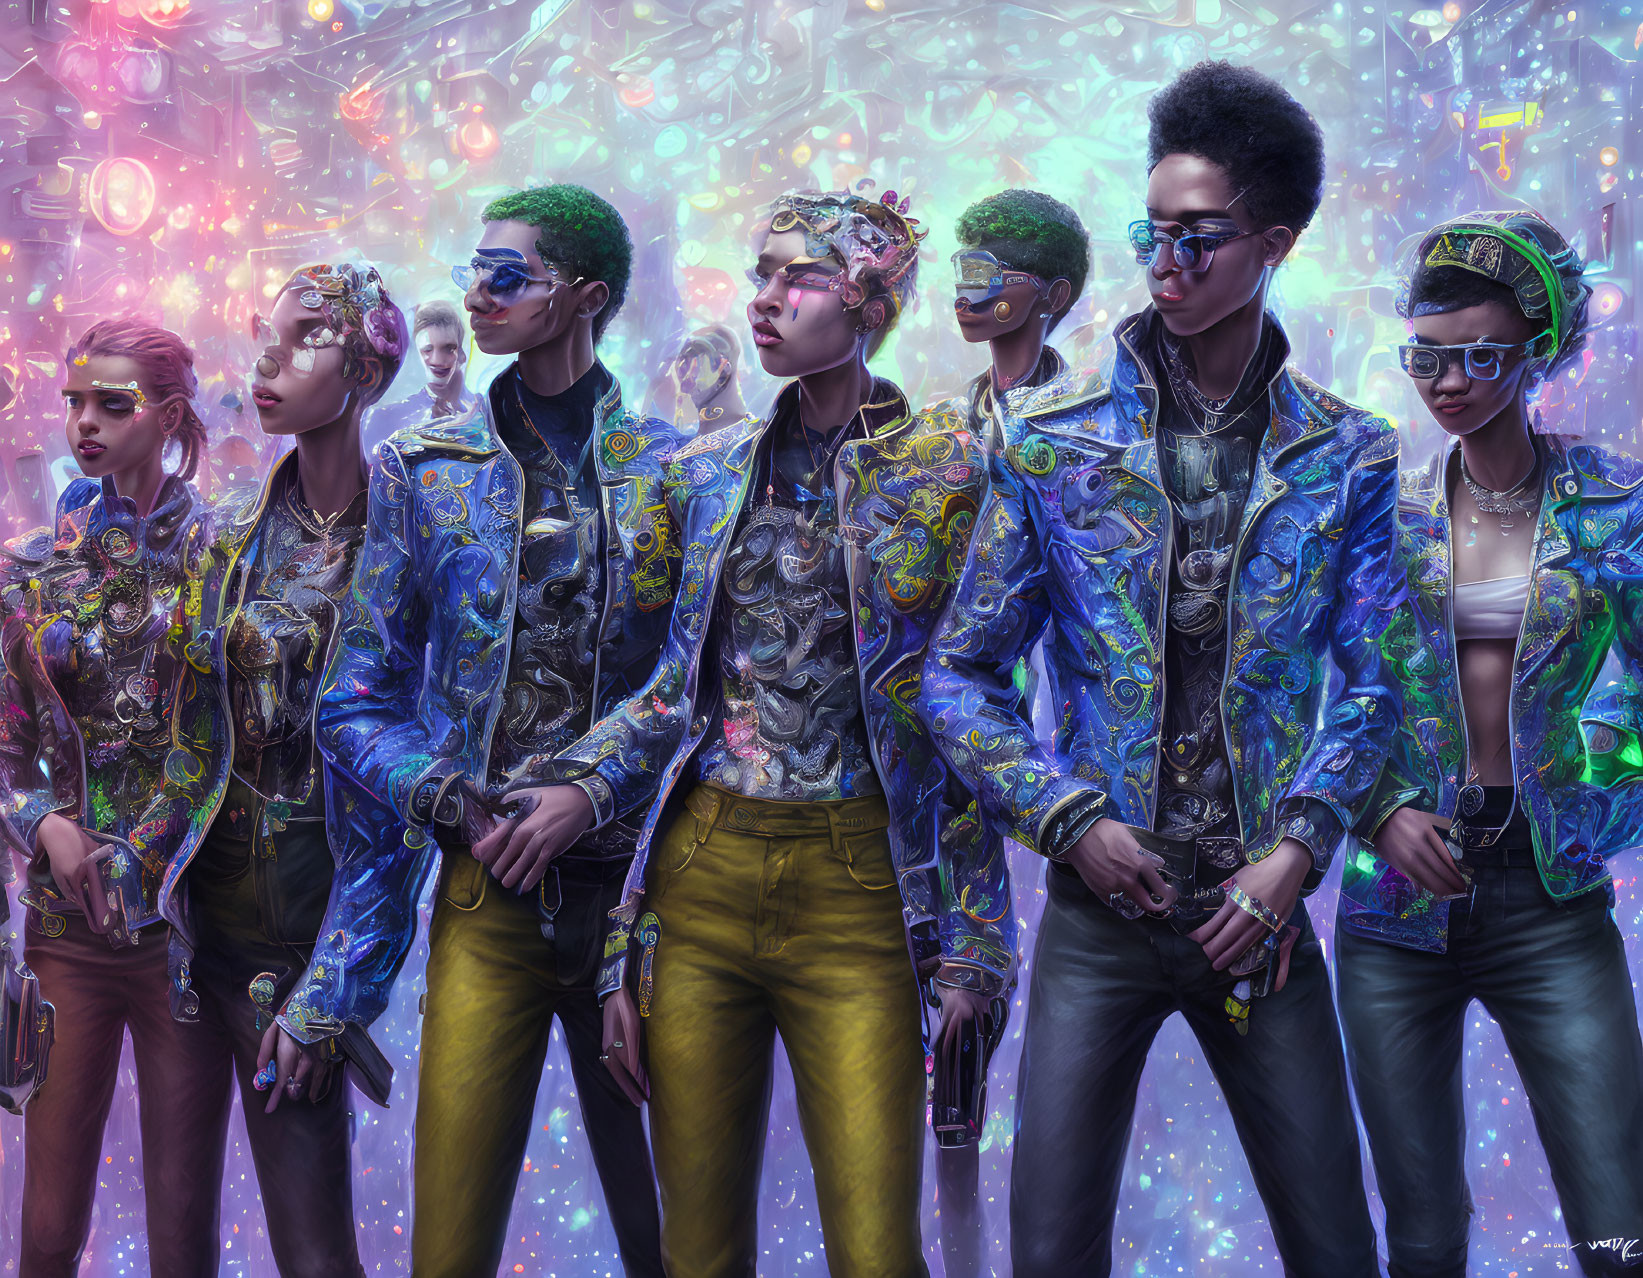 Futuristic sunglasses and metallic clothing on stylish group